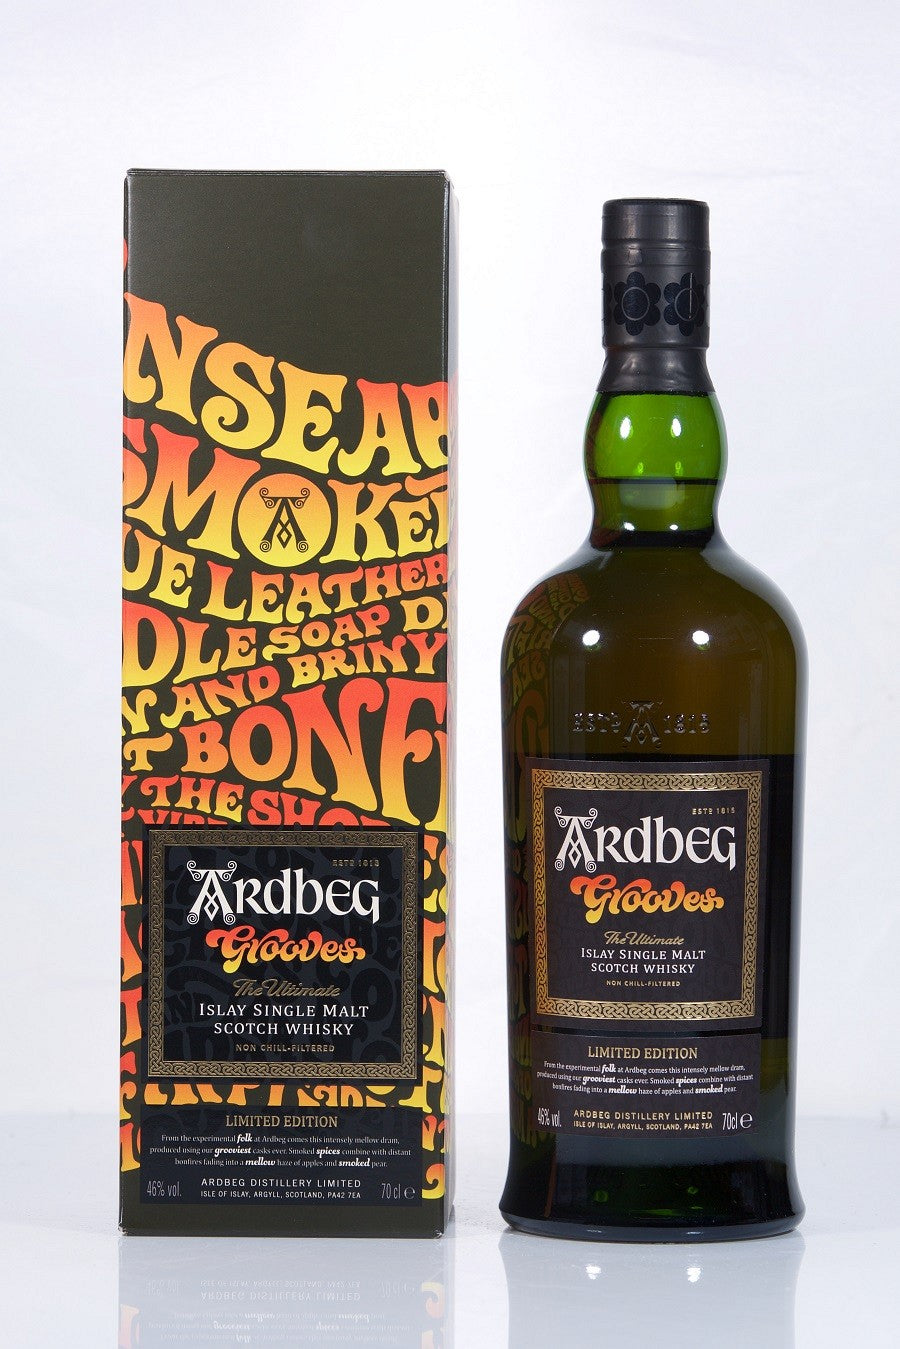 ardbeg grooves limited edition | scotch whisky | single malt whisky